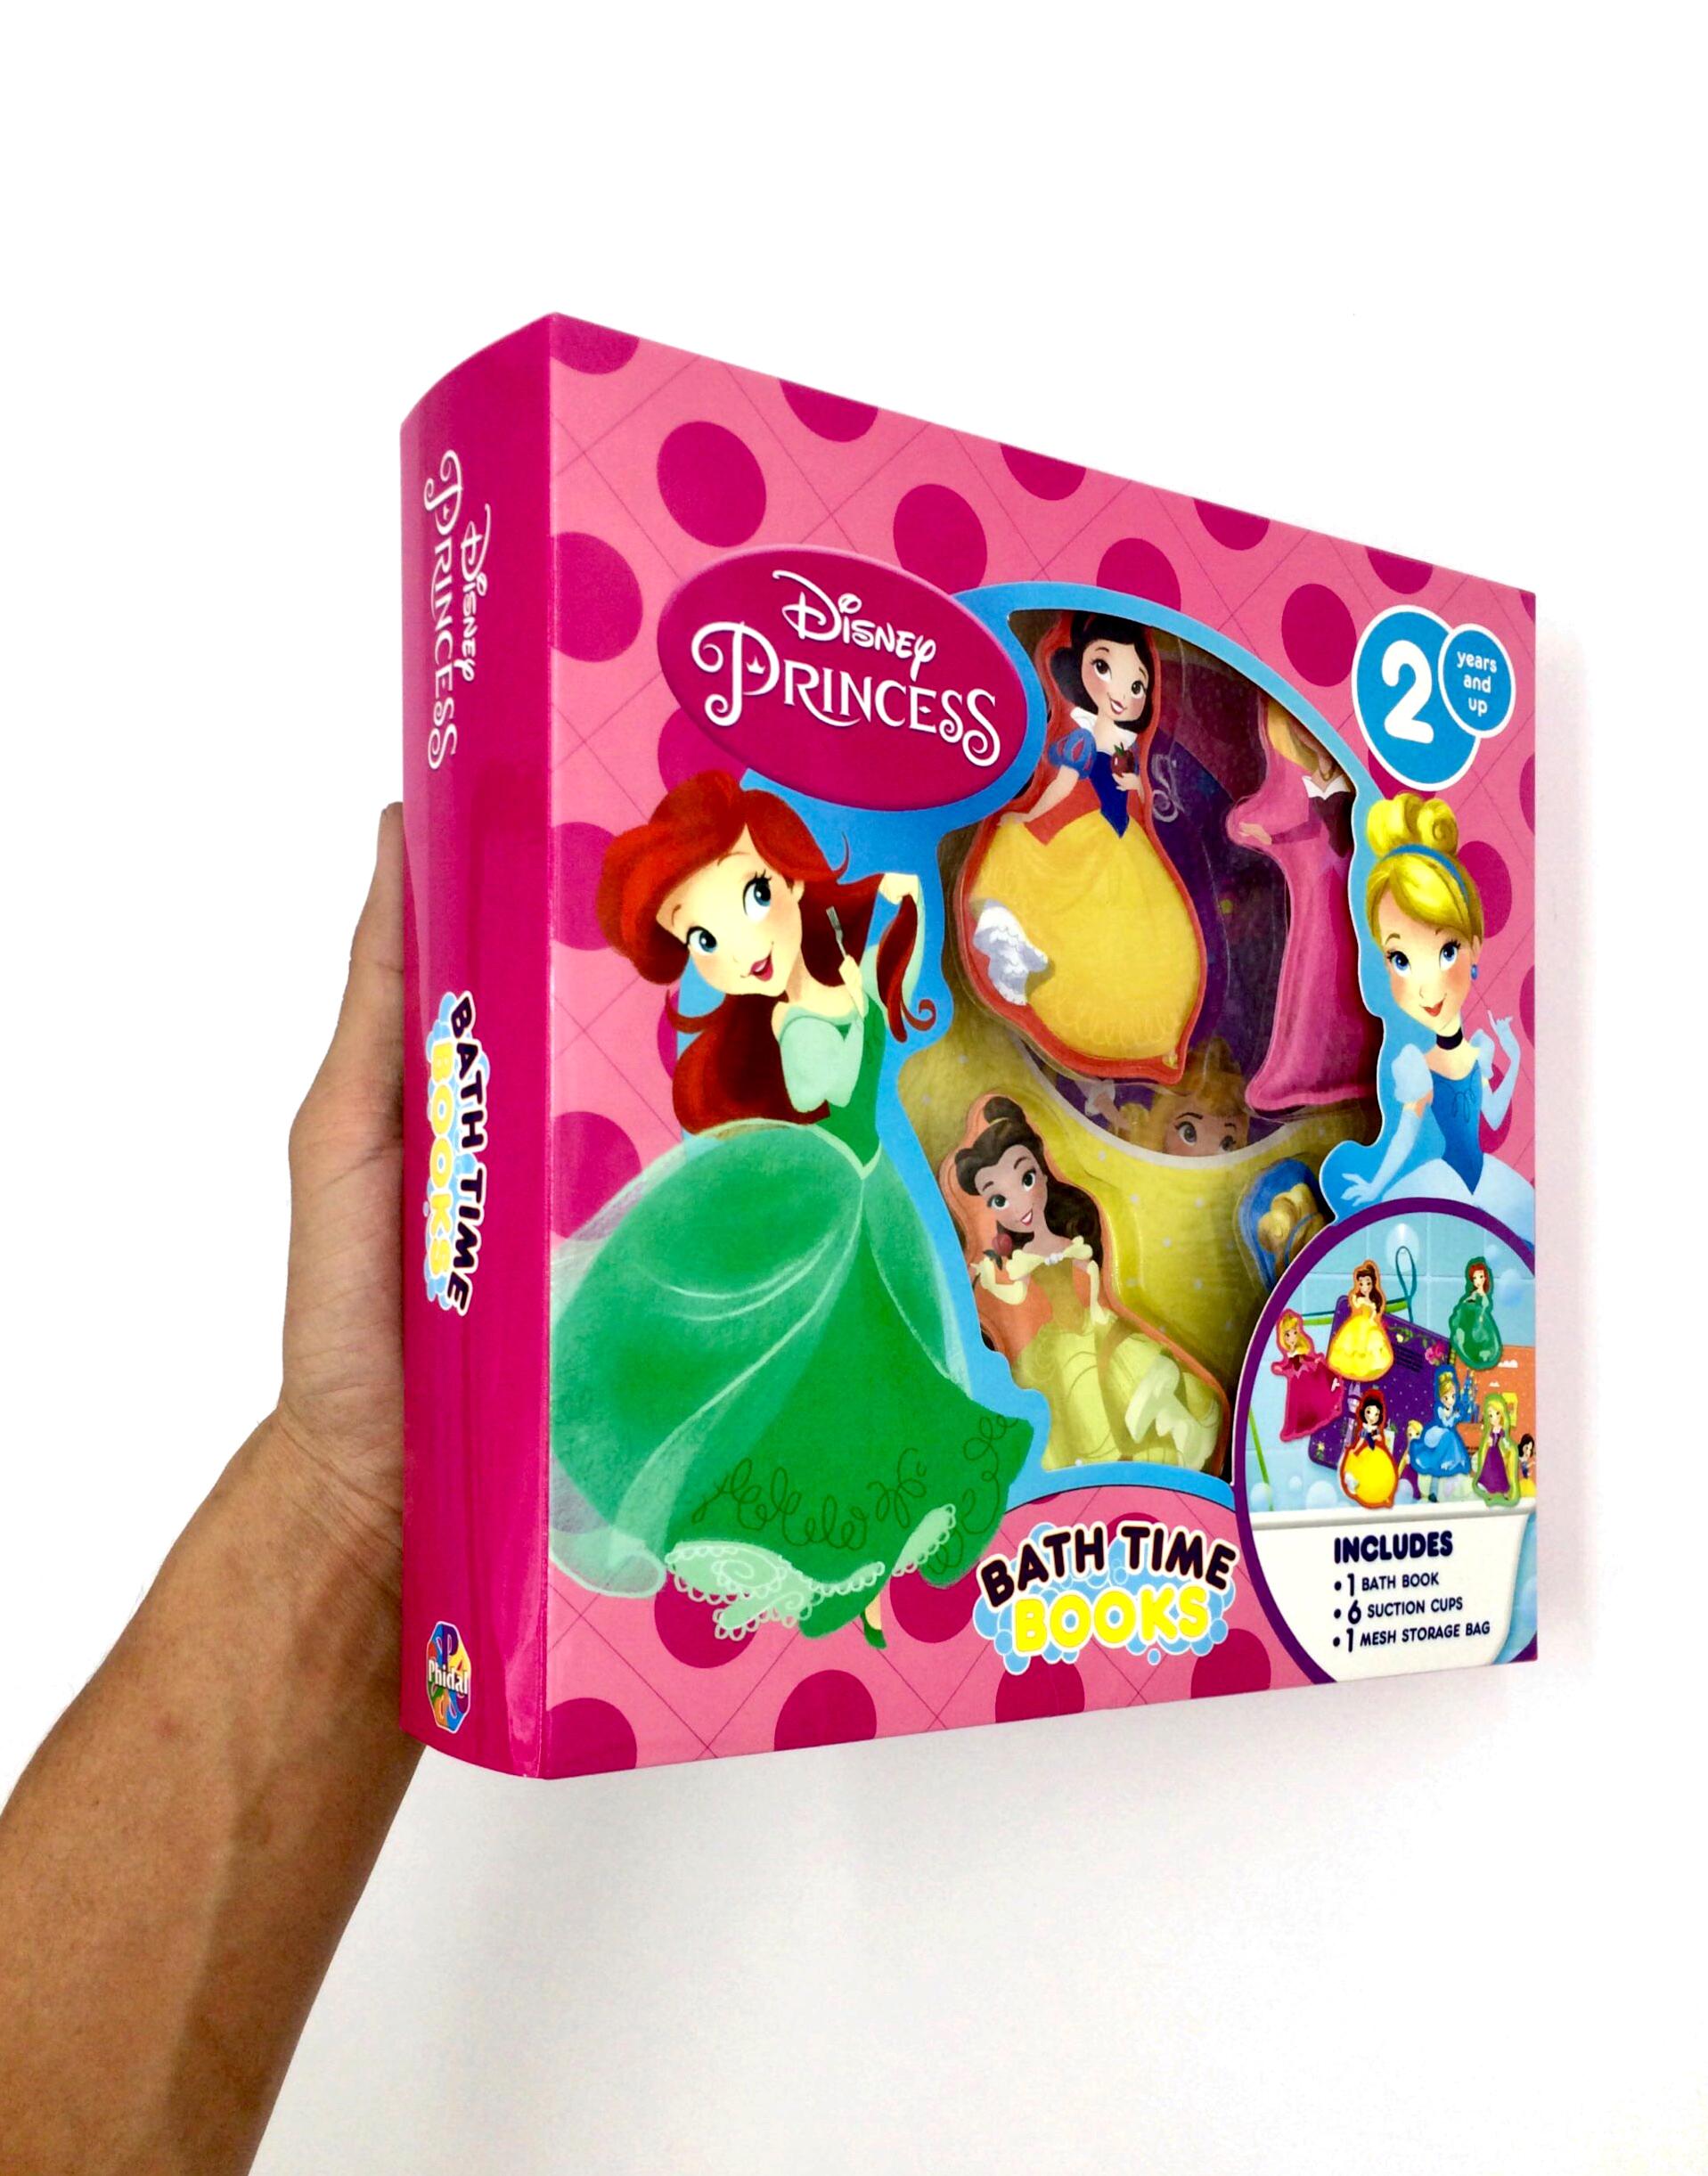 Disney Princess: Bath Time Books